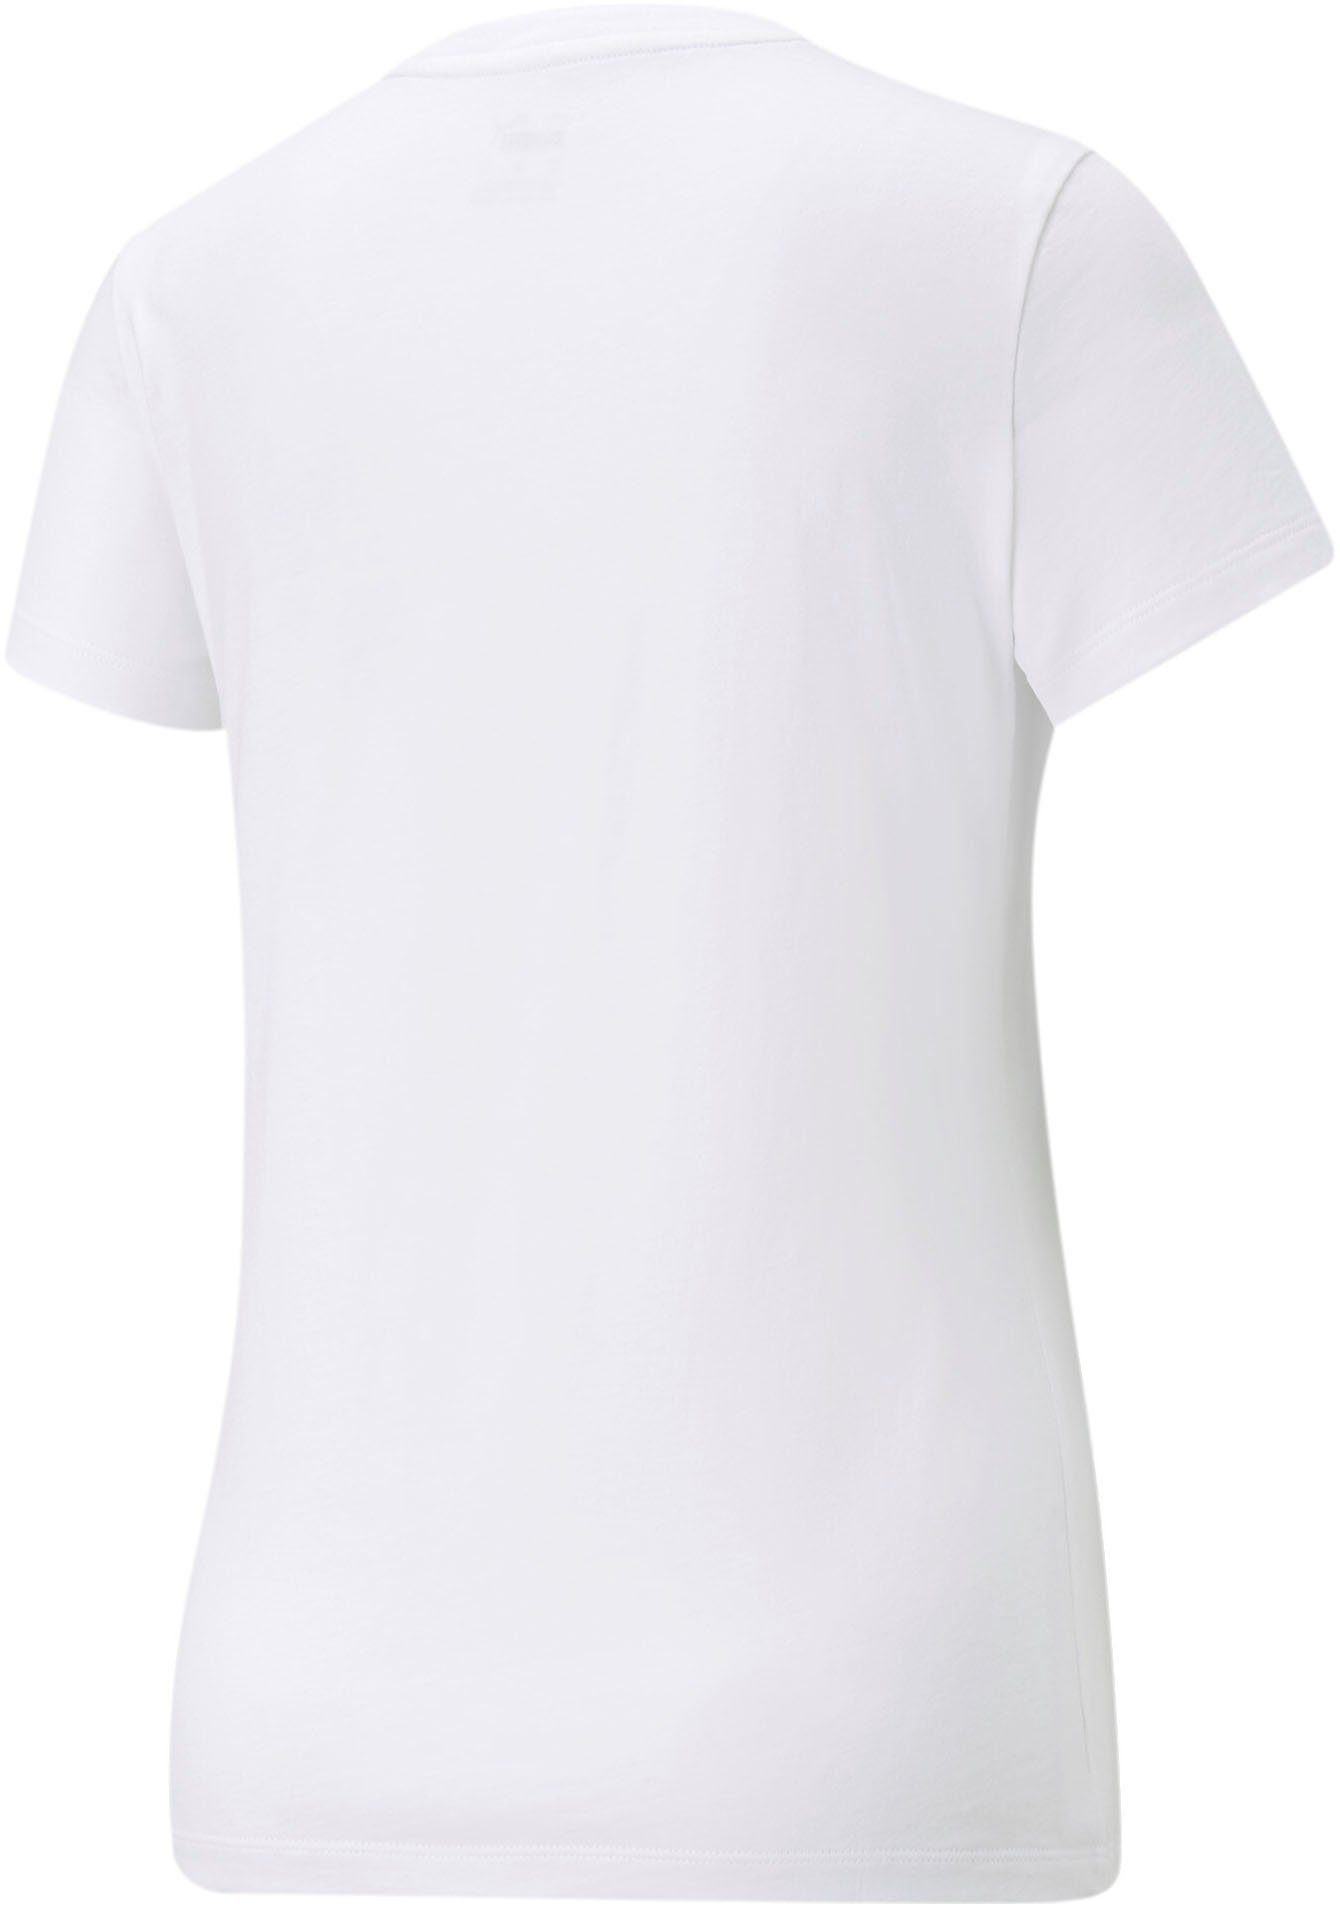 TEE PUMA metallic LOGO METALLIC ESS+ White-silver Puma T-Shirt